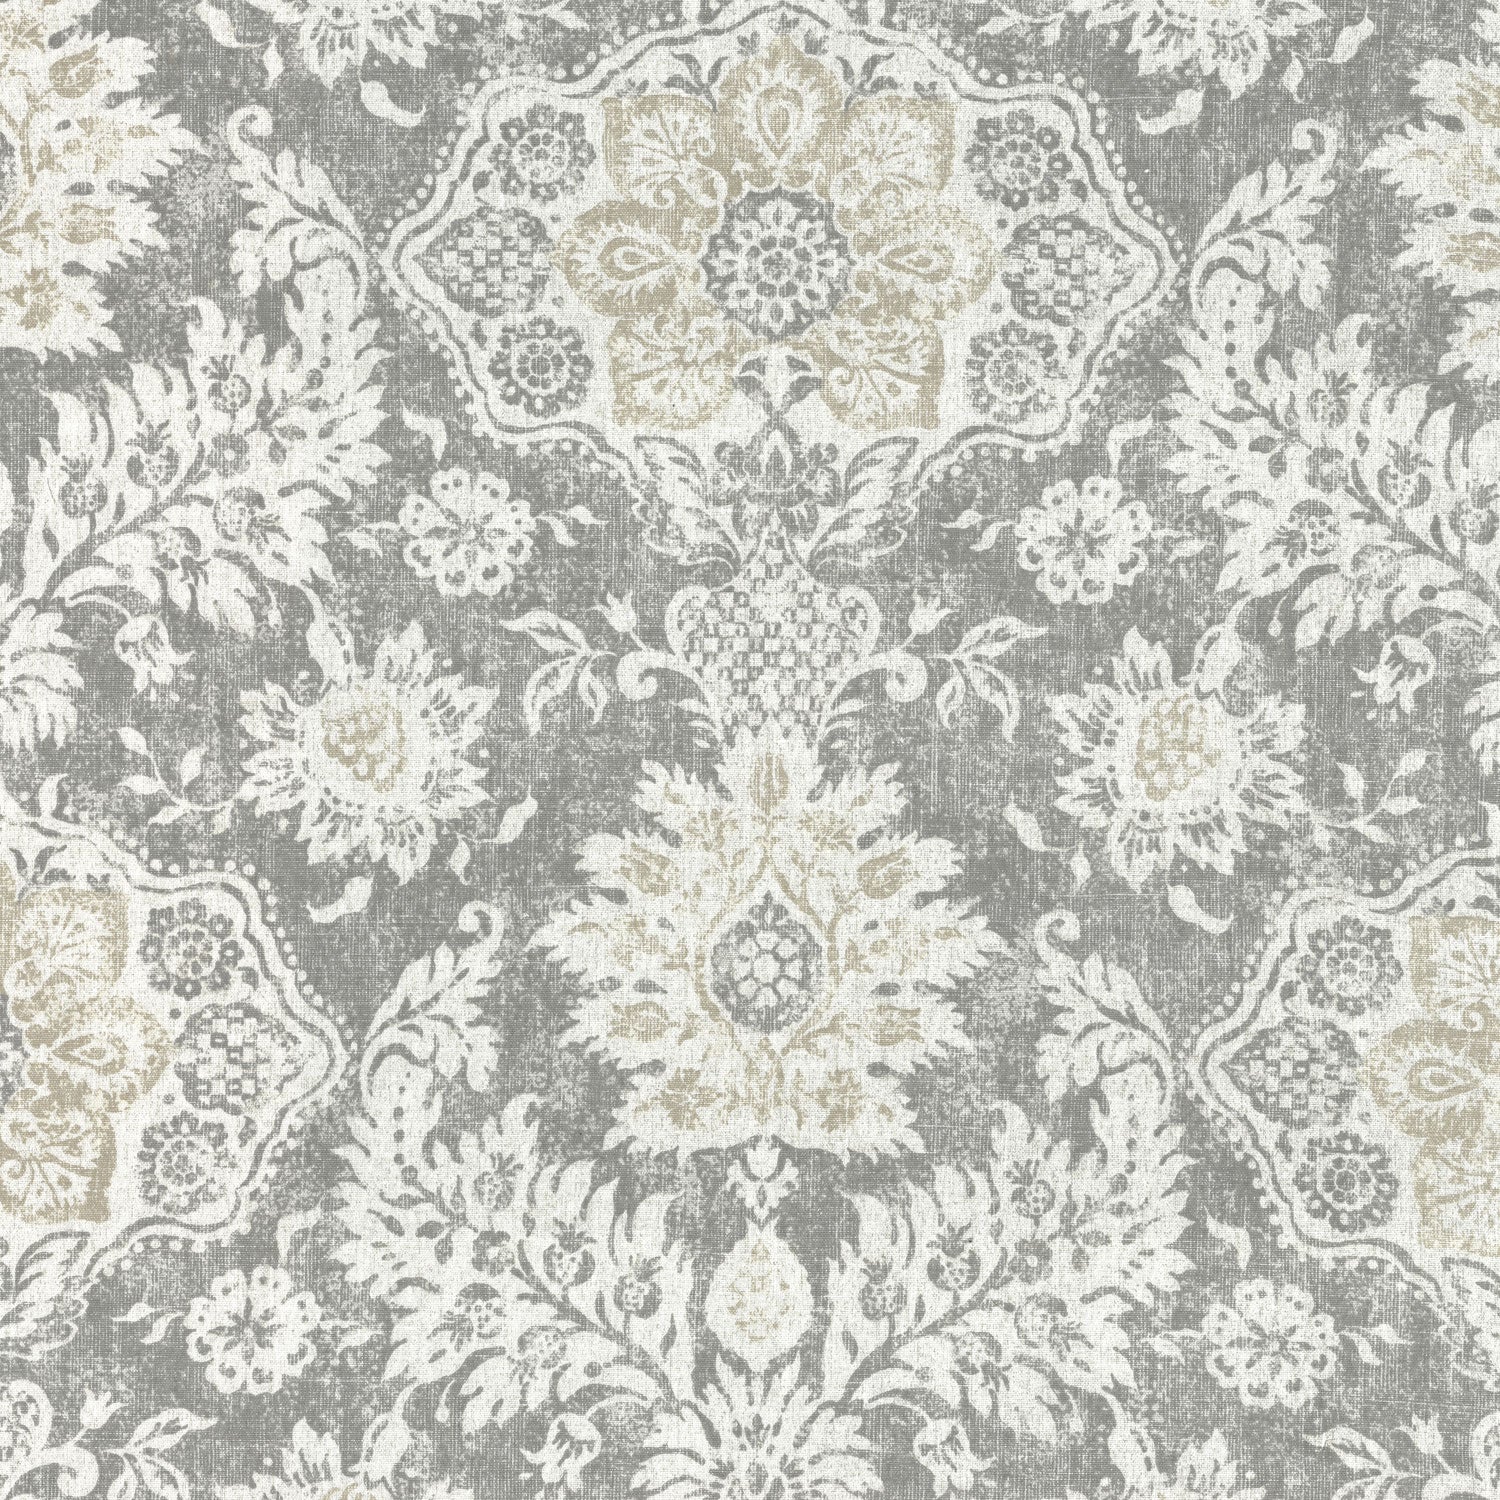 duvet cover in belmont mist pale gray floral damask